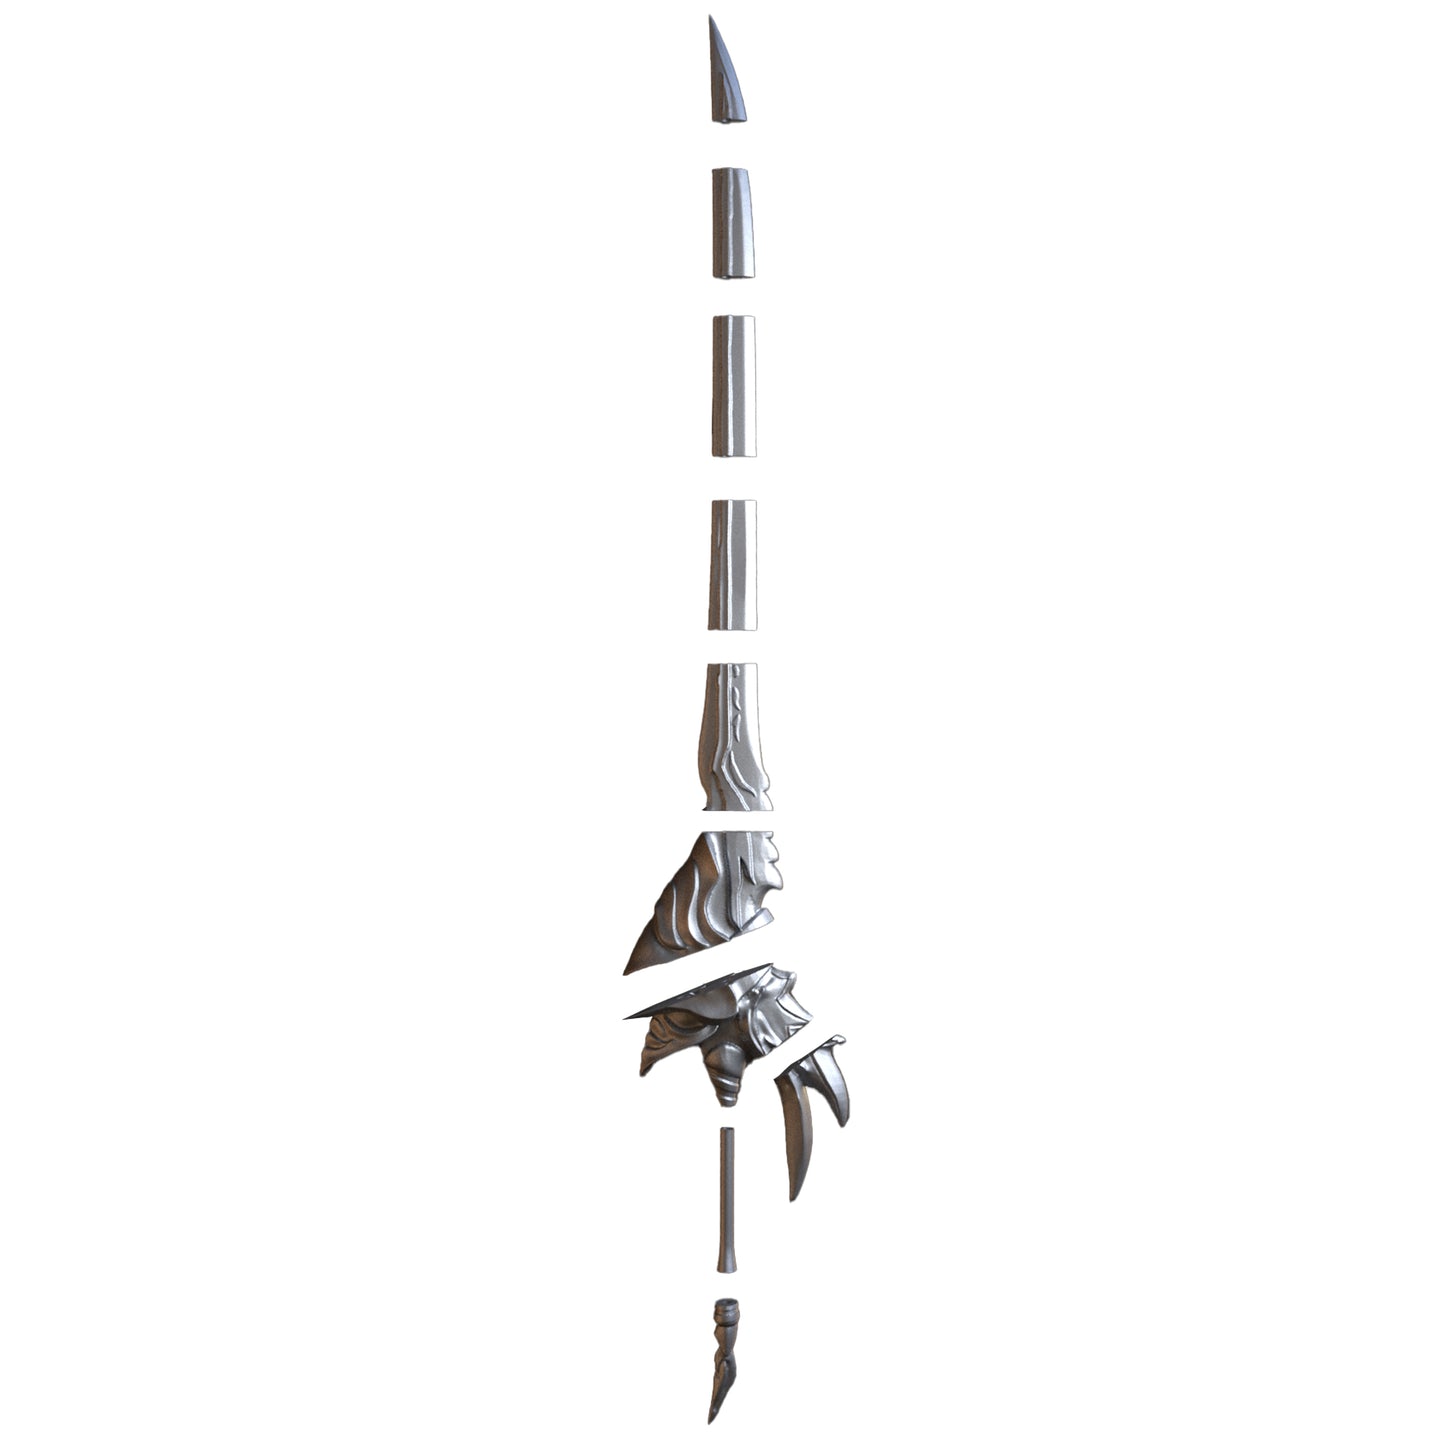 Elesis Blazing Heart Sword - Digital 3D Model Files and Physical 3D Printed Kit Options - Elesis Cosplay